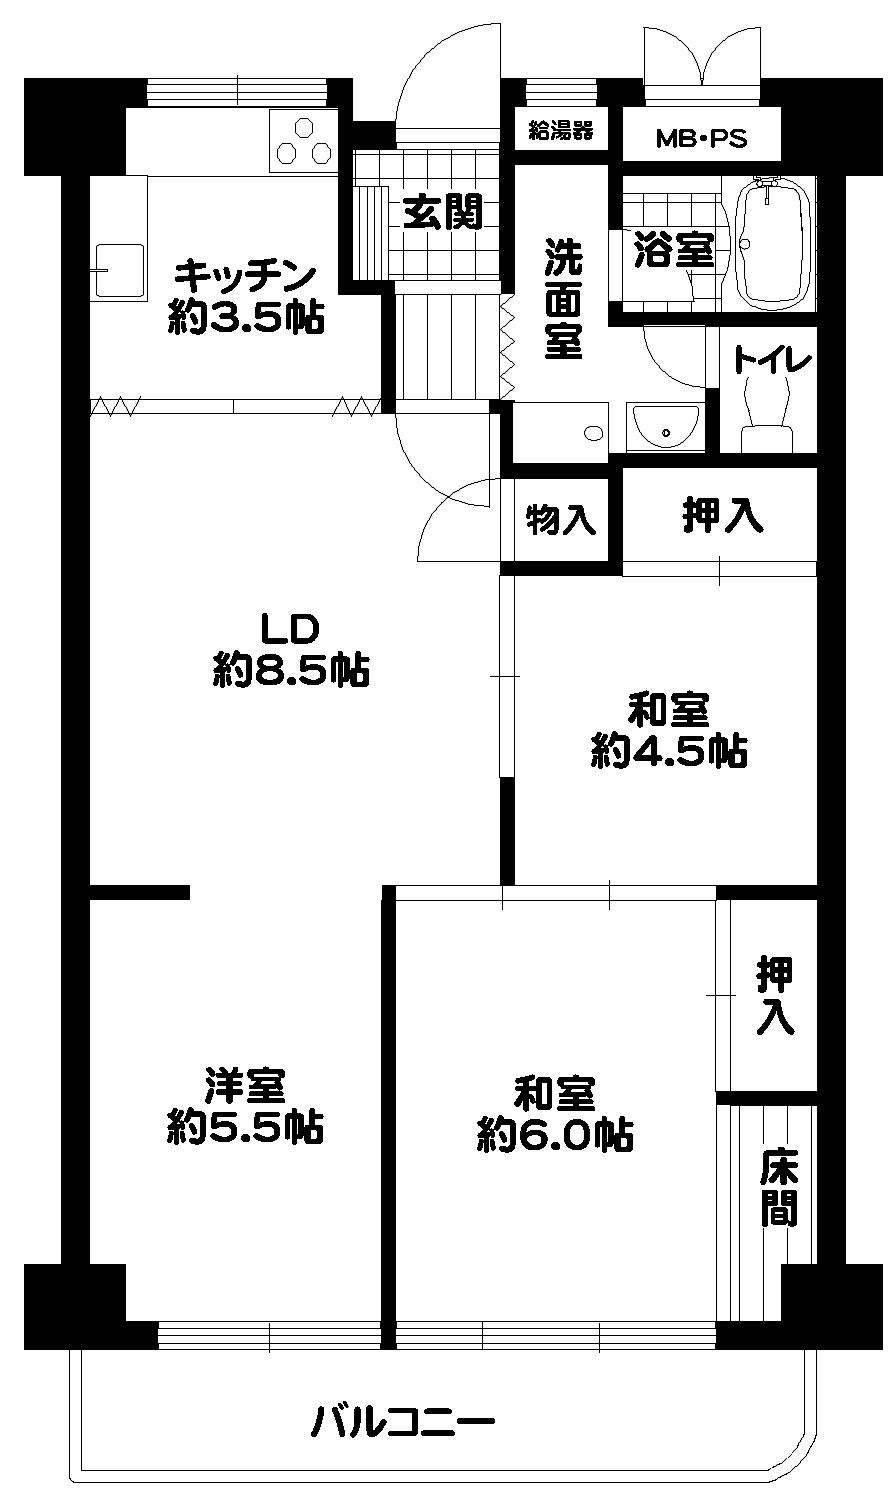 Floor plan. 3LDK, Price 7.36 million yen, Occupied area 65.52 sq m , Balcony area 7.24 sq m